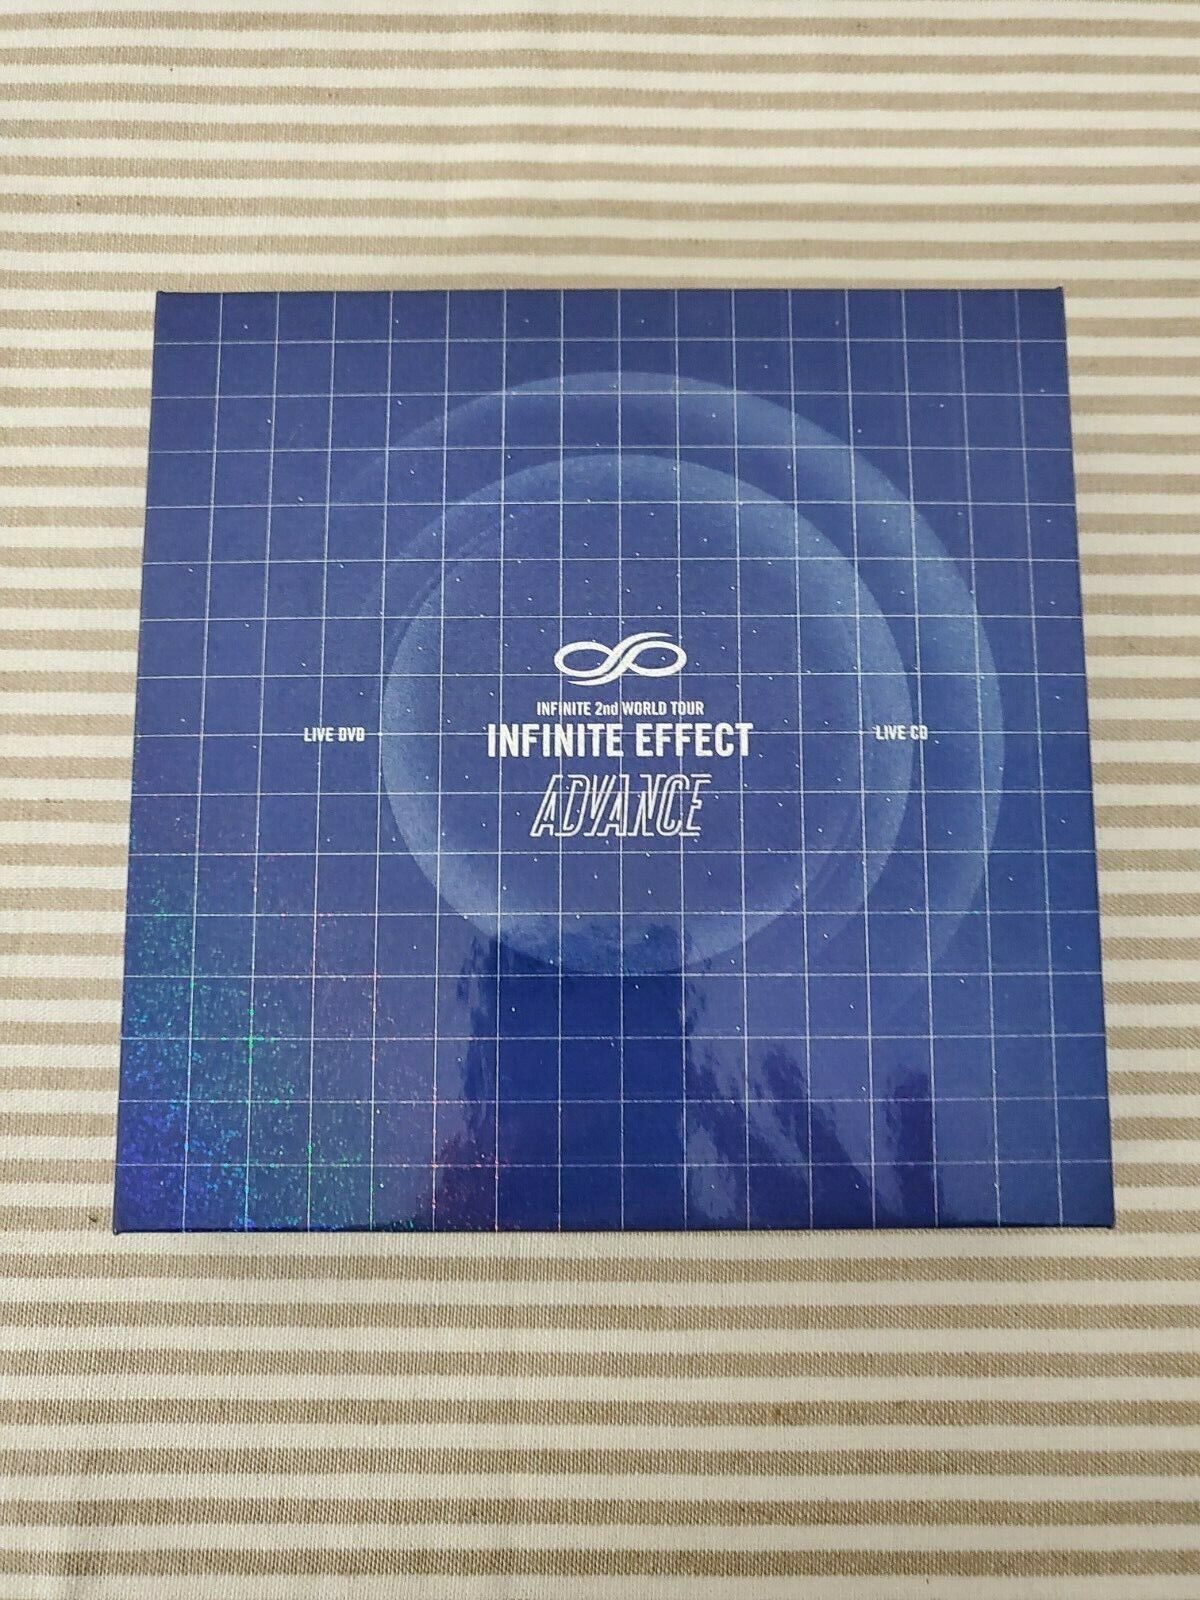 Rare Infinite Effect Advance Live 2 CD 2 DVD Album + Photocard | eBay